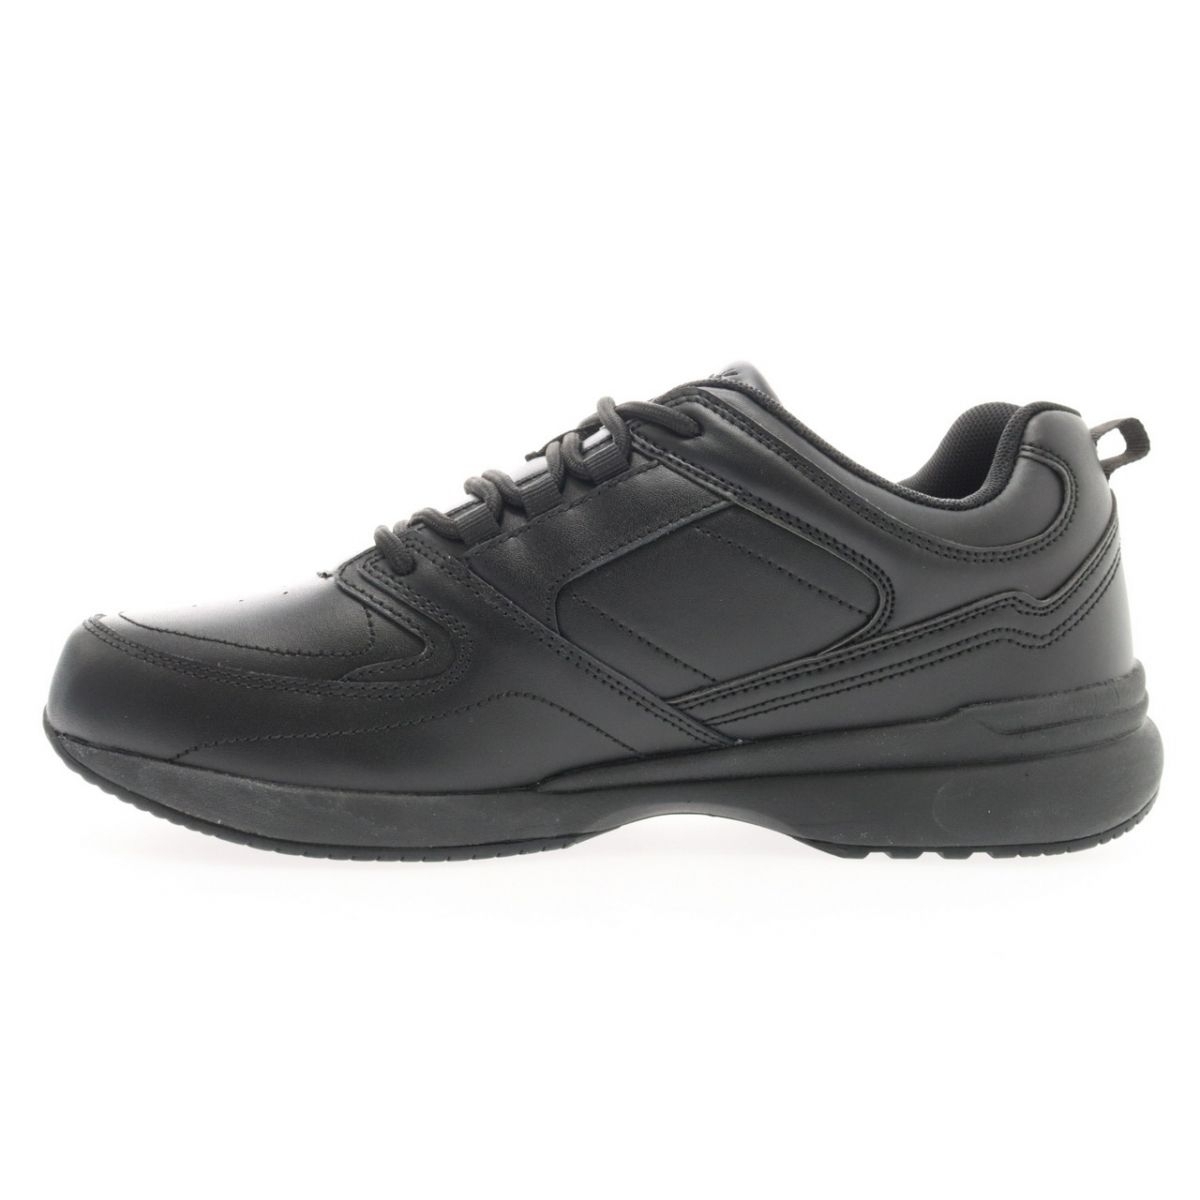 Propet Men's Life Walker Sport Sneaker Black - MAA272LBLK BLACK - BLACK, 13